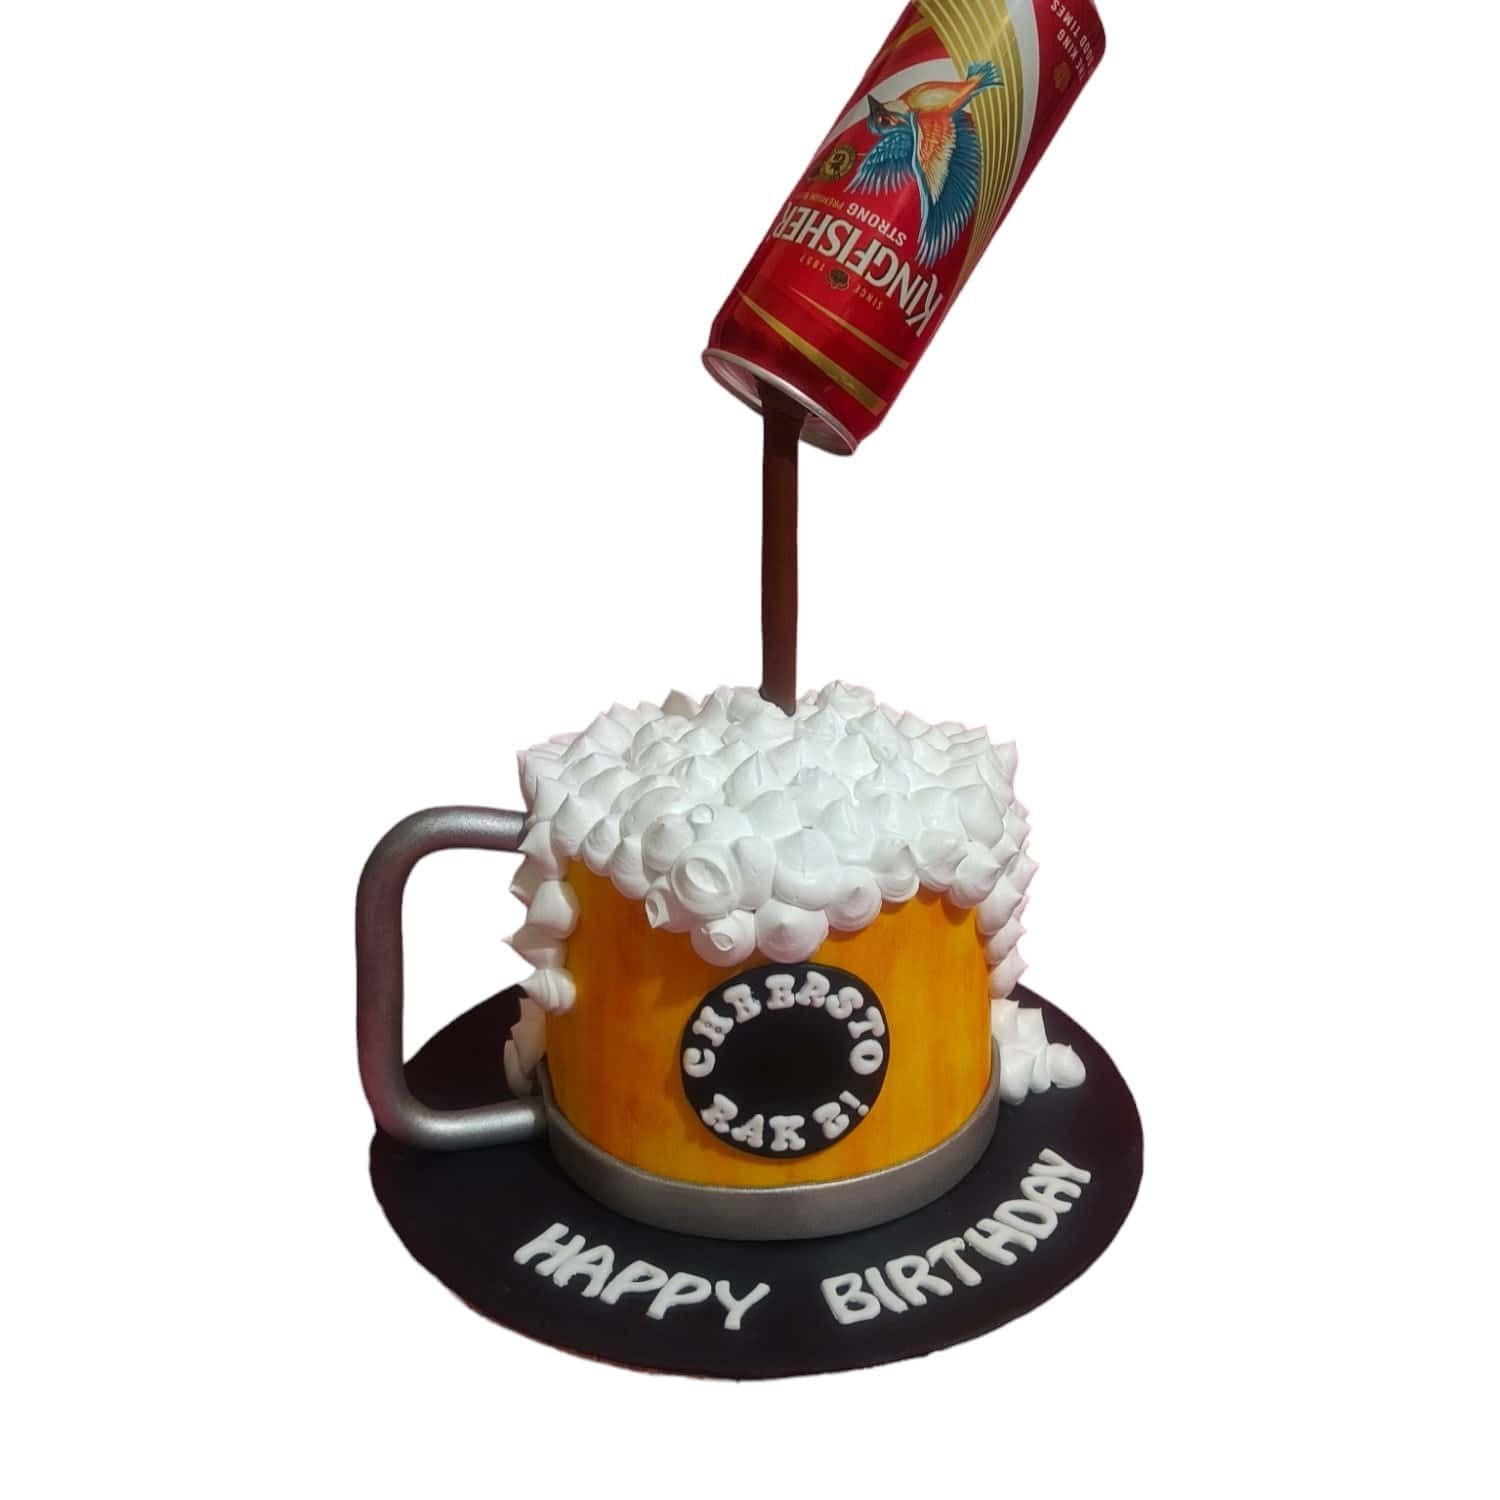 The Bake Basket - Gravity Defying beer can cake. 🍺 #budweiser  #gravitydefyingcake #antigravity #beercan #the_bake_basket #kolkatabaker  #kolkata #cakesinkolkata #creative #cakedesign #themecake #customised  #cakedecorating #instacakes #cakesofinstagram ...